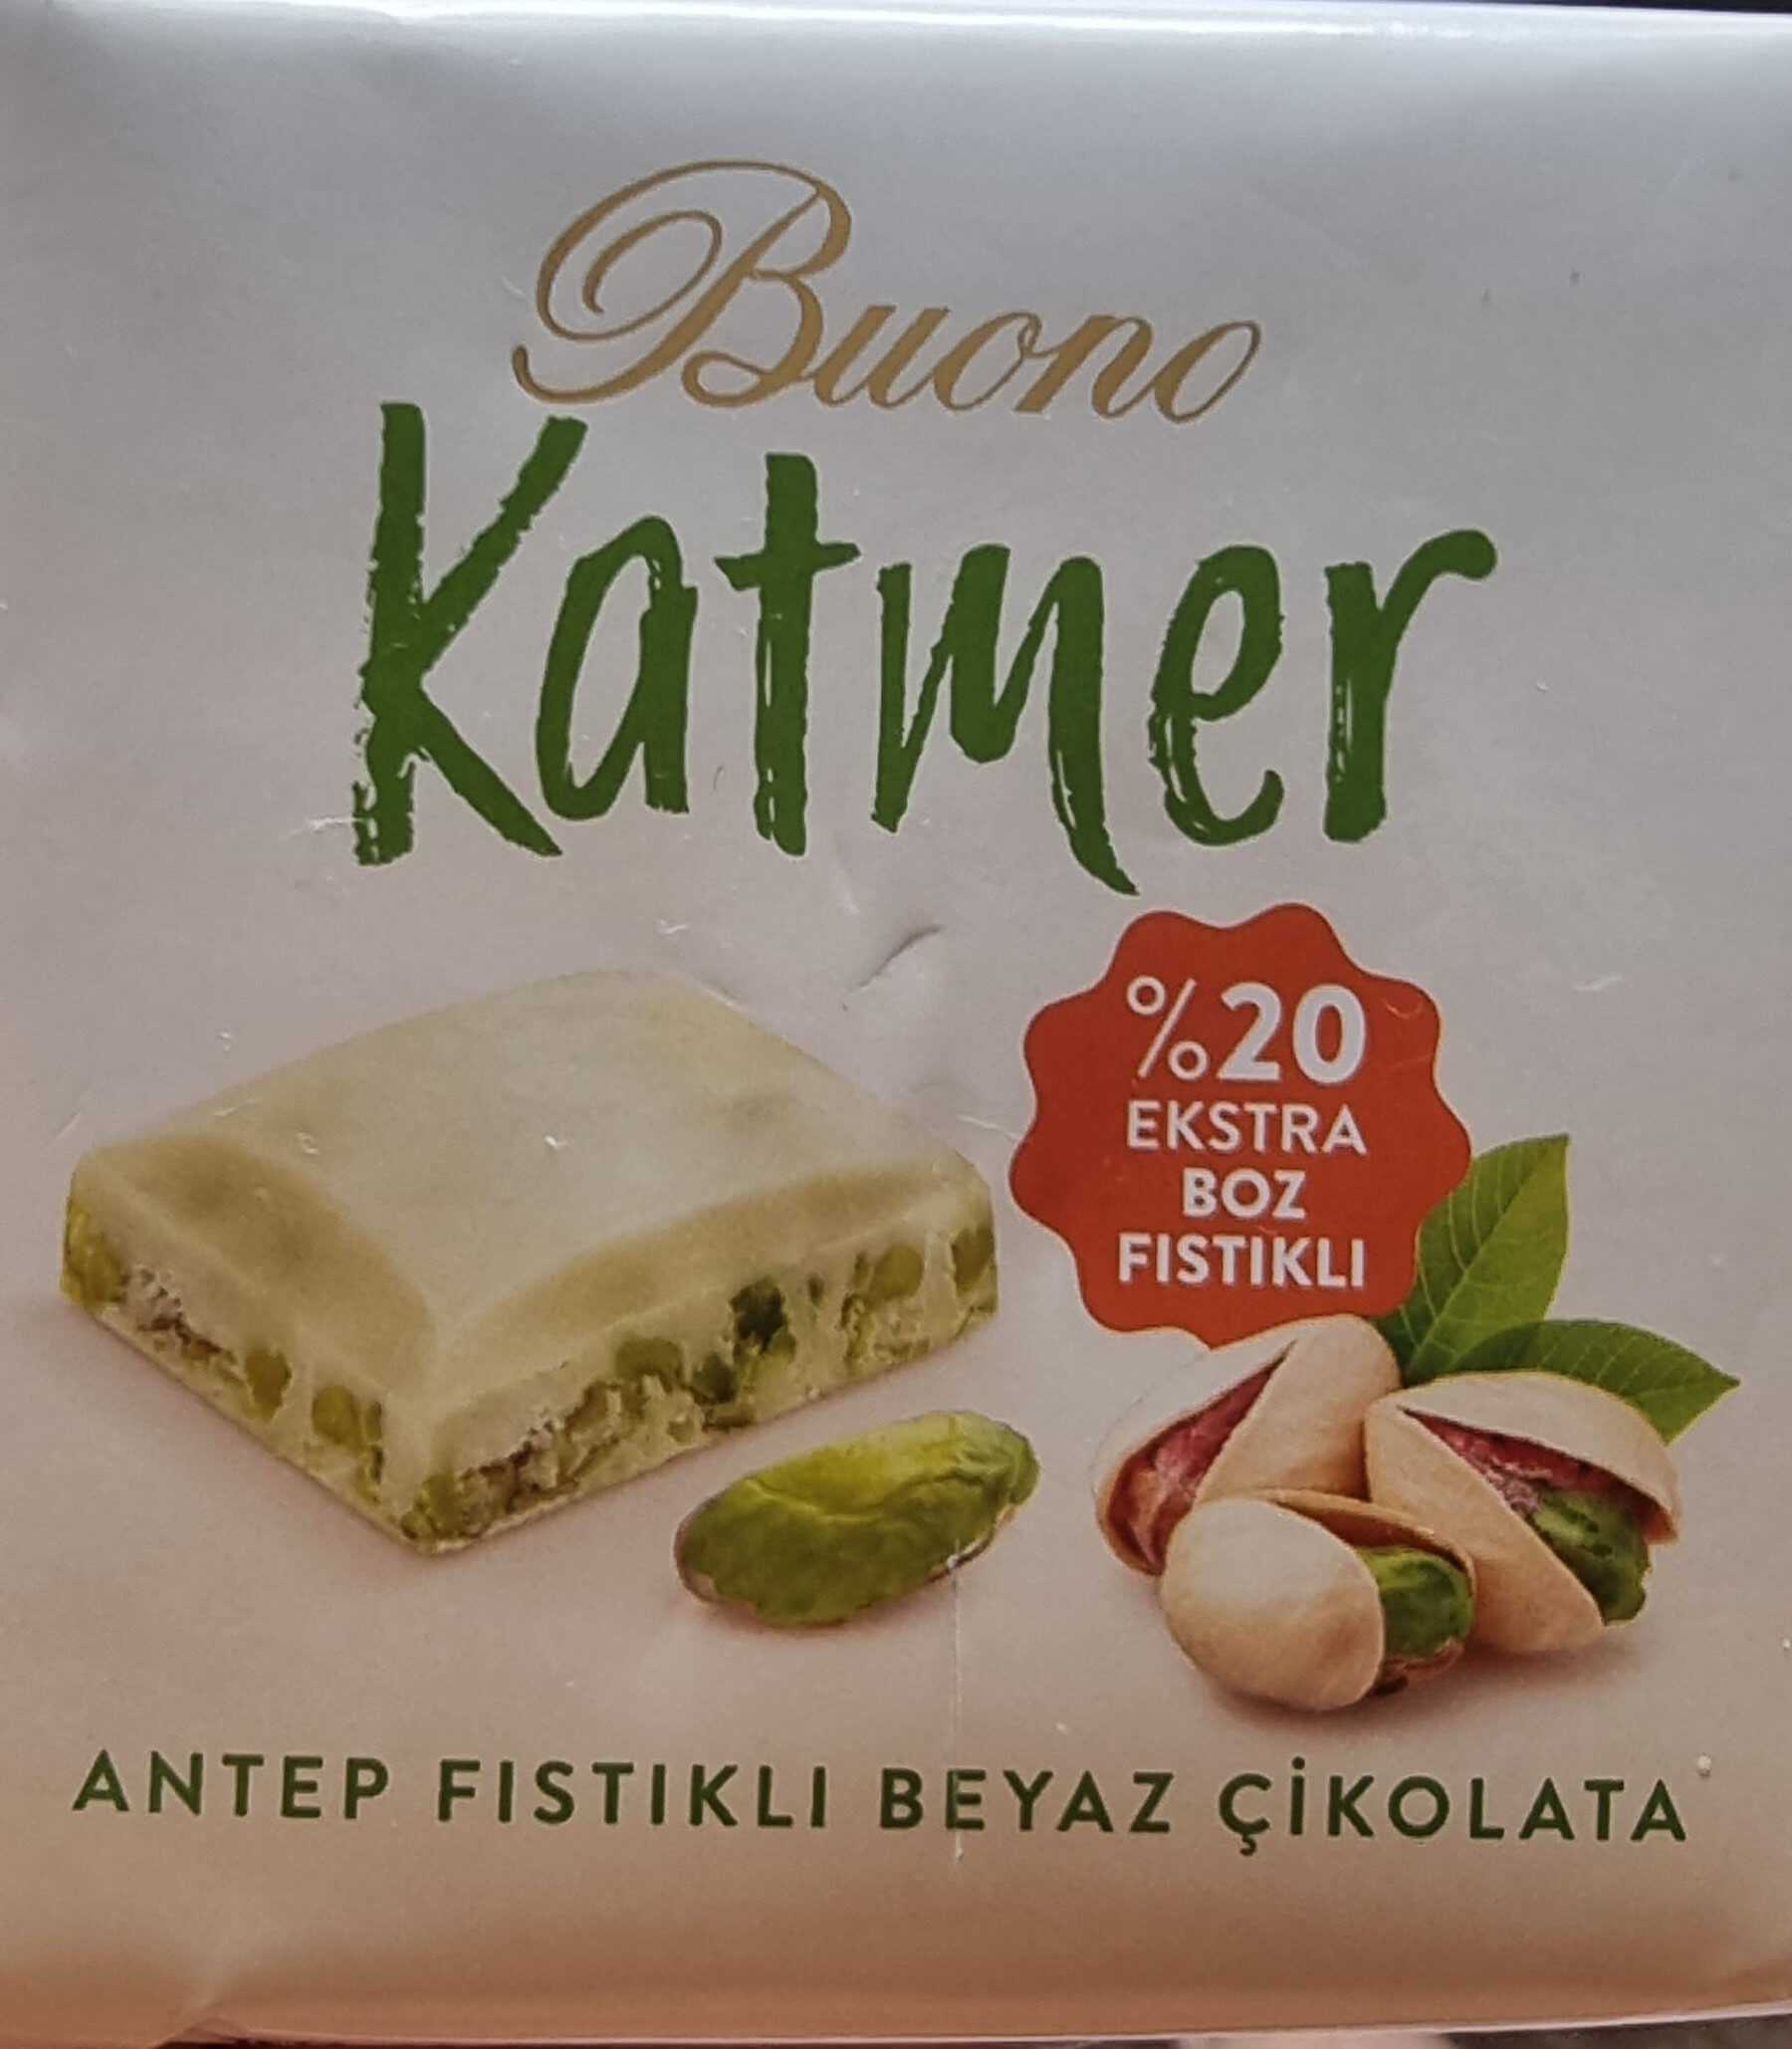 Buono Katmer - Produkt - en